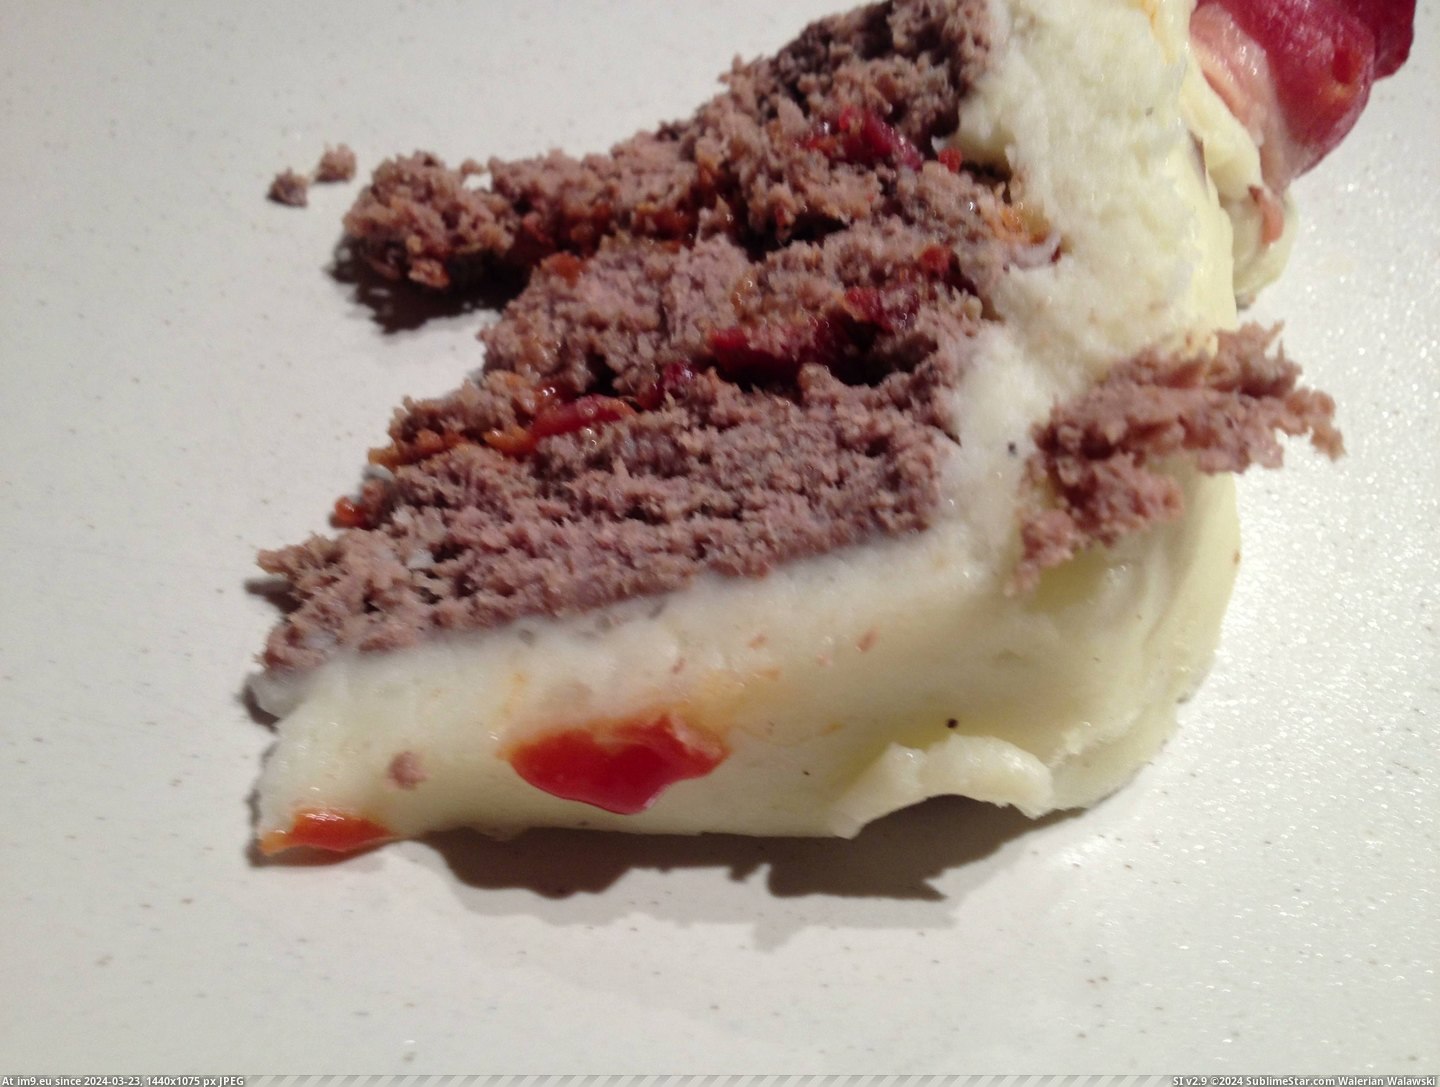  #Meatcake  [Pics] Meatcake 2 Pic. (Изображение из альбом My r/PICS favs))